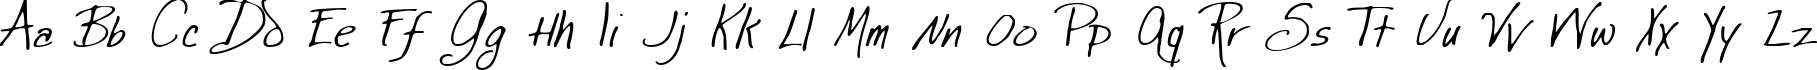 Пример написания английского алфавита шрифтом Jewel Hill